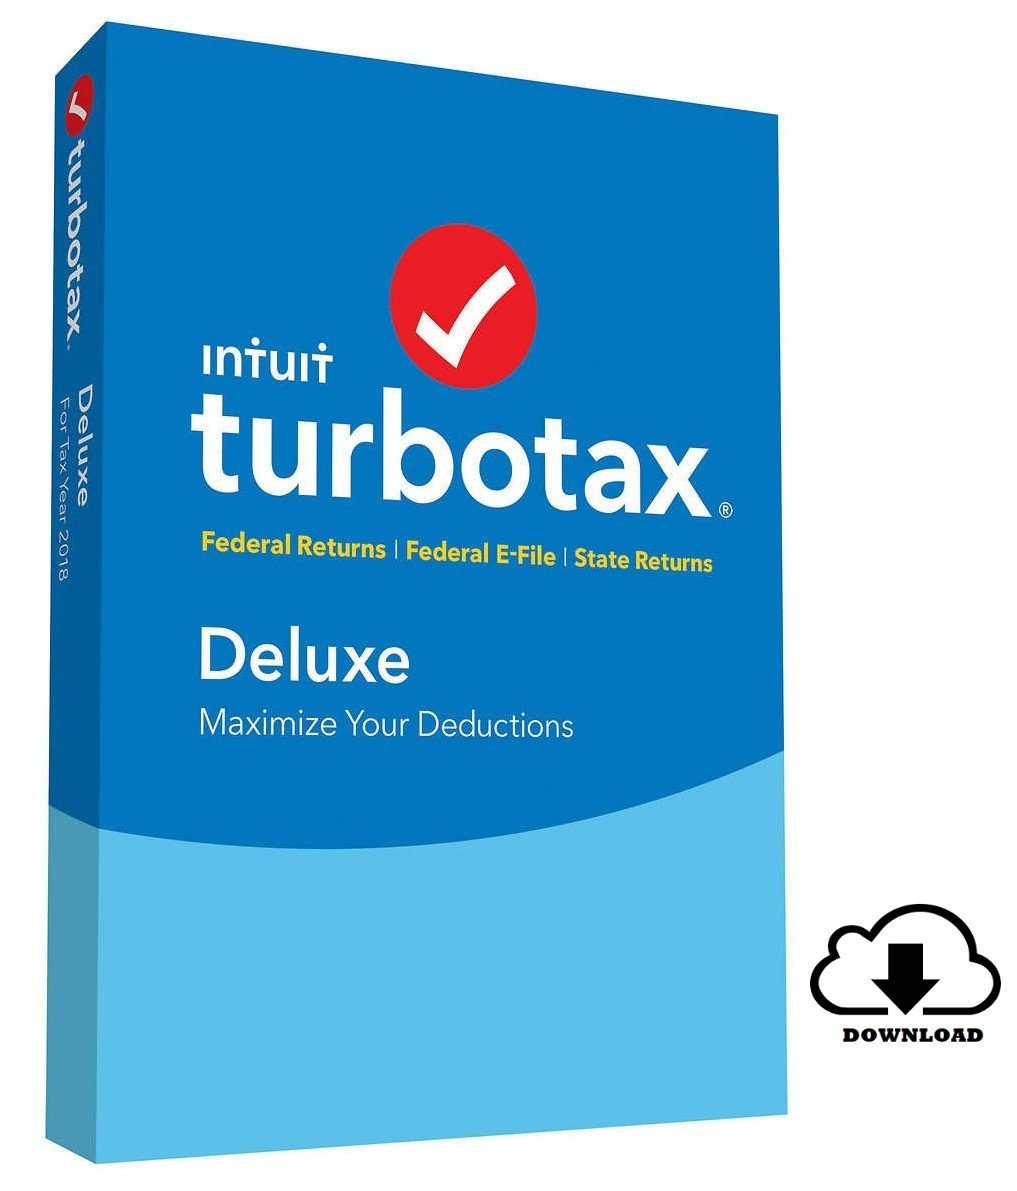 download turbotax 2018 mac torrents